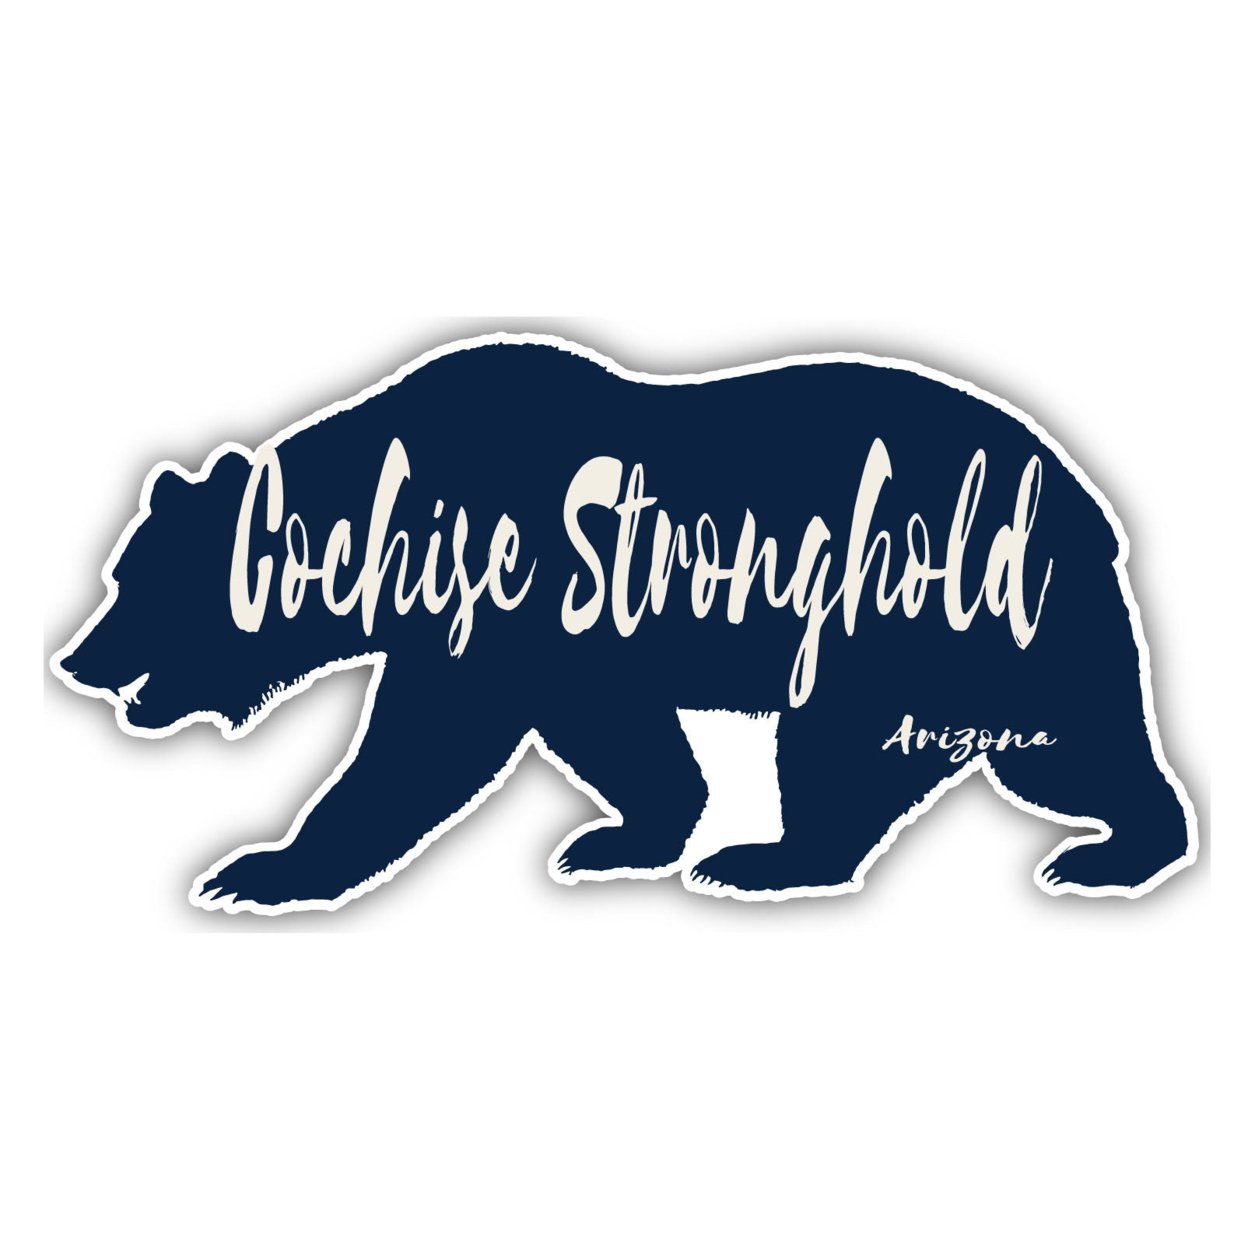 Cochise Stronghold Arizona Souvenir Decorative Stickers (Choose Theme And Size) - Single Unit, 2-Inch, Bear